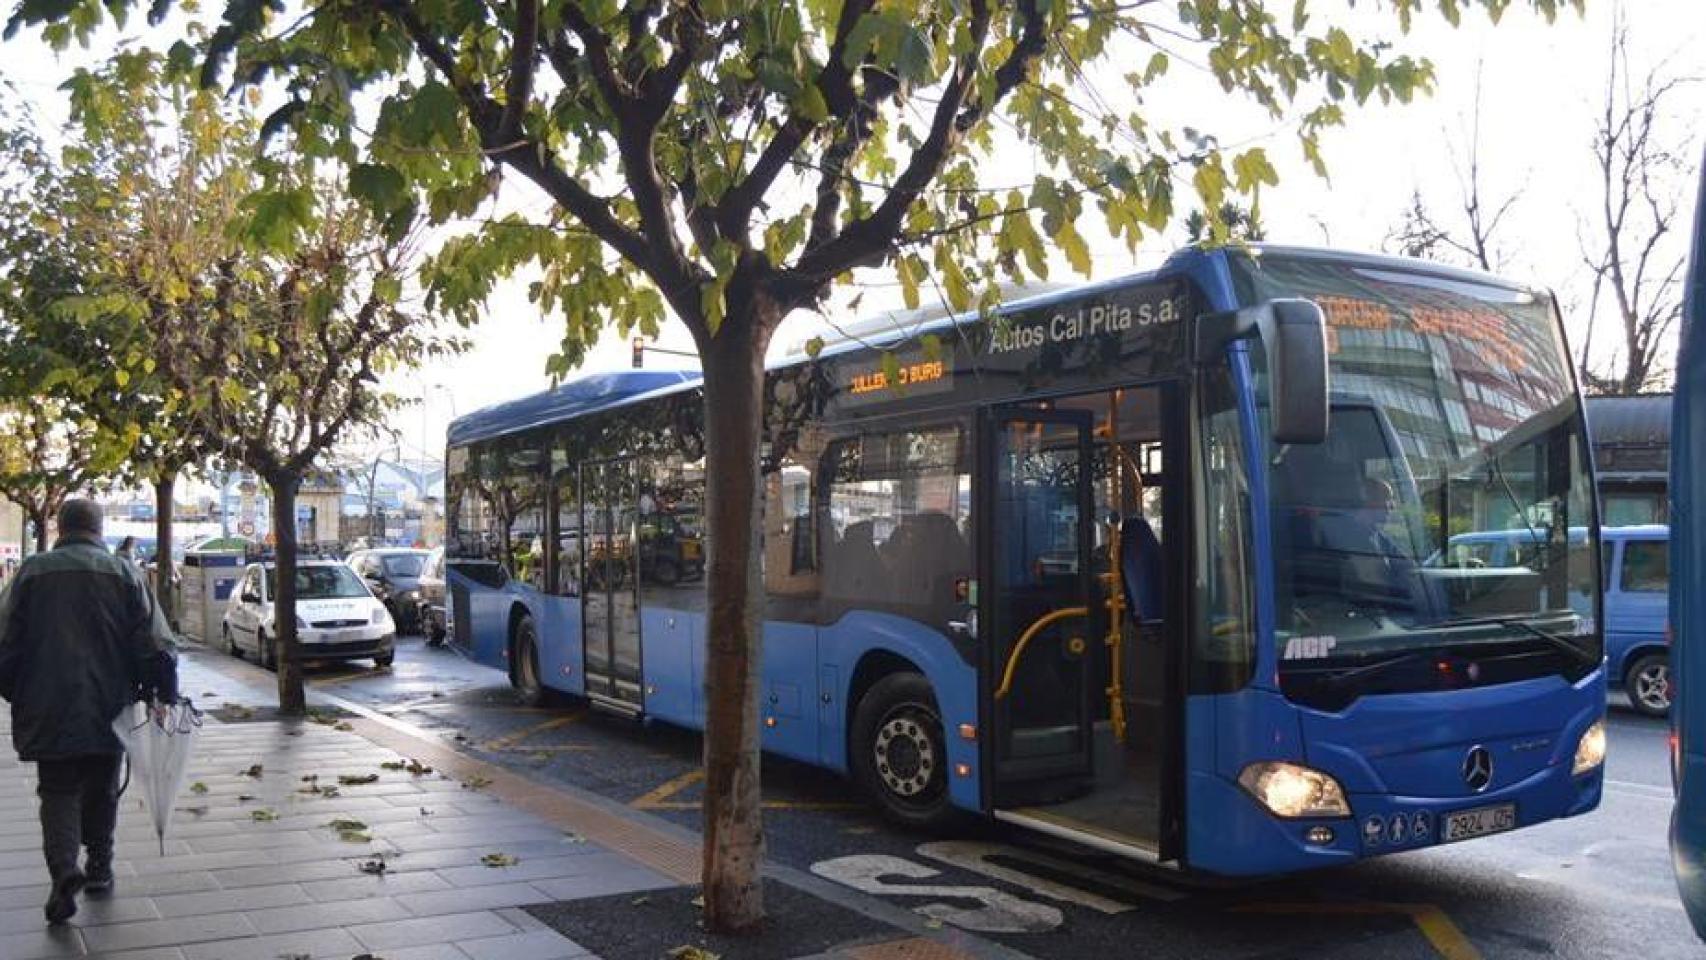 Bus interurbano de A Coruña